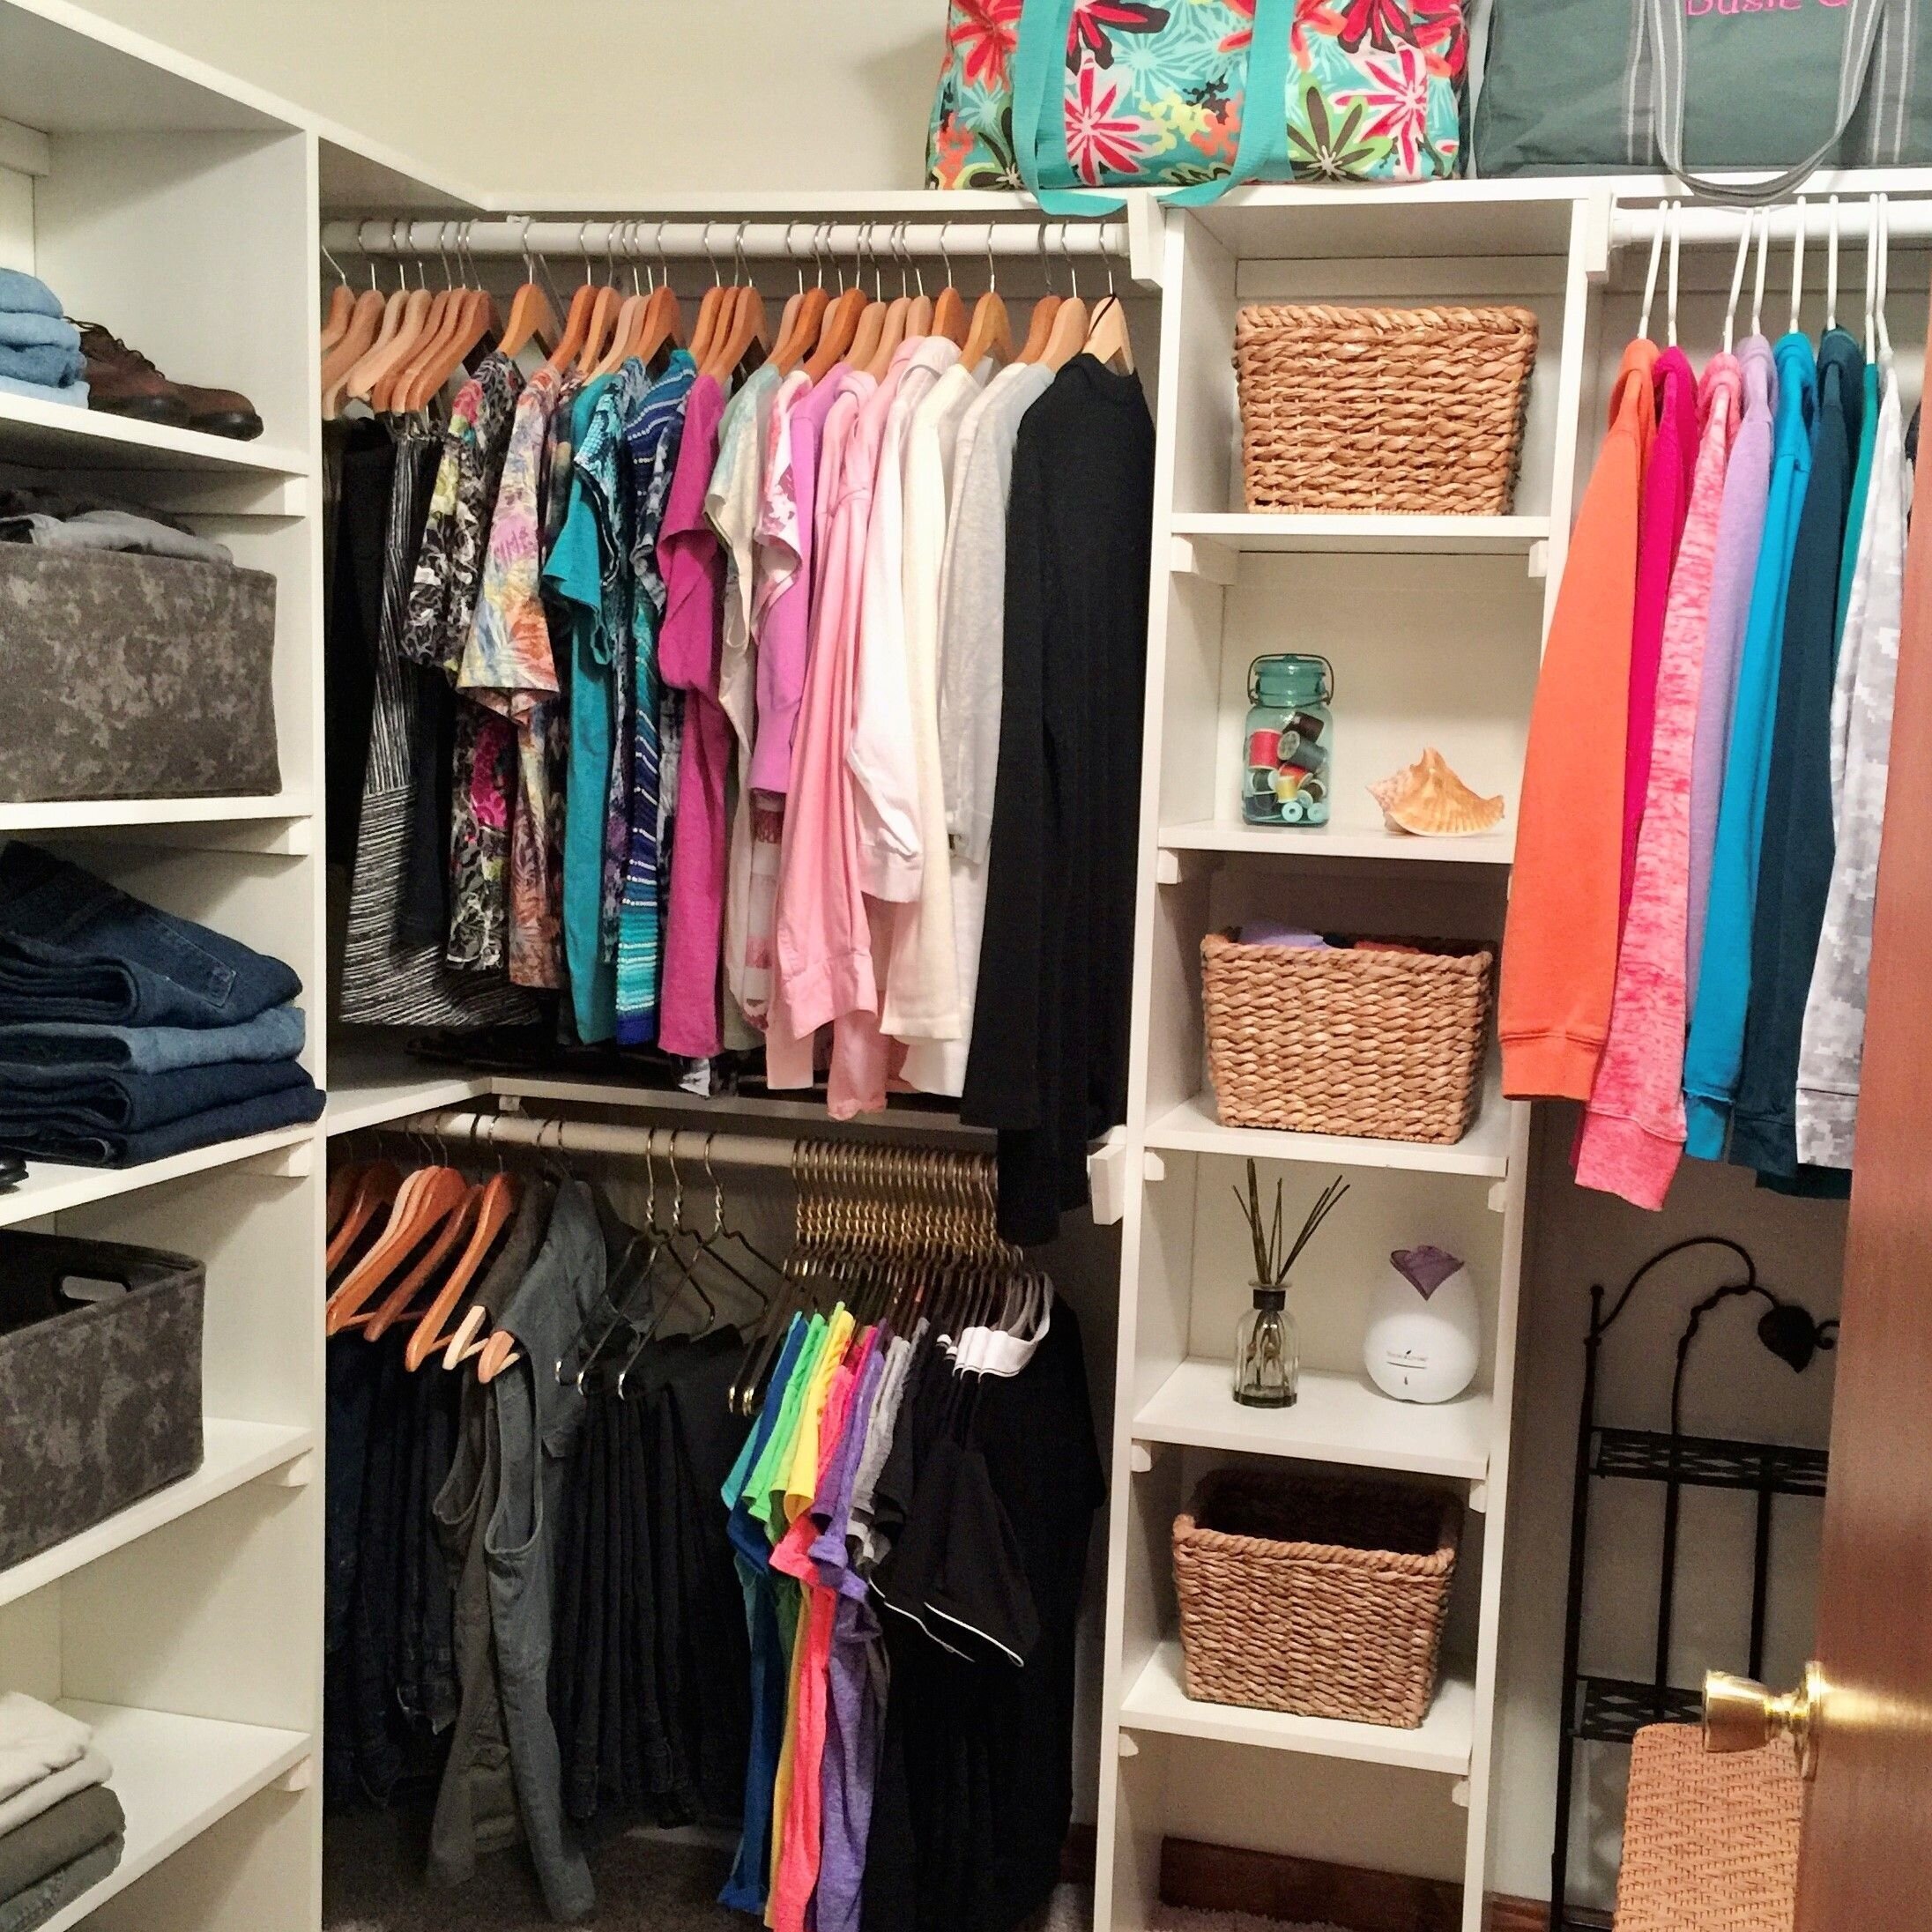 Cleaning closet organization: 6 inspirational ideas — The Organized Mom Life